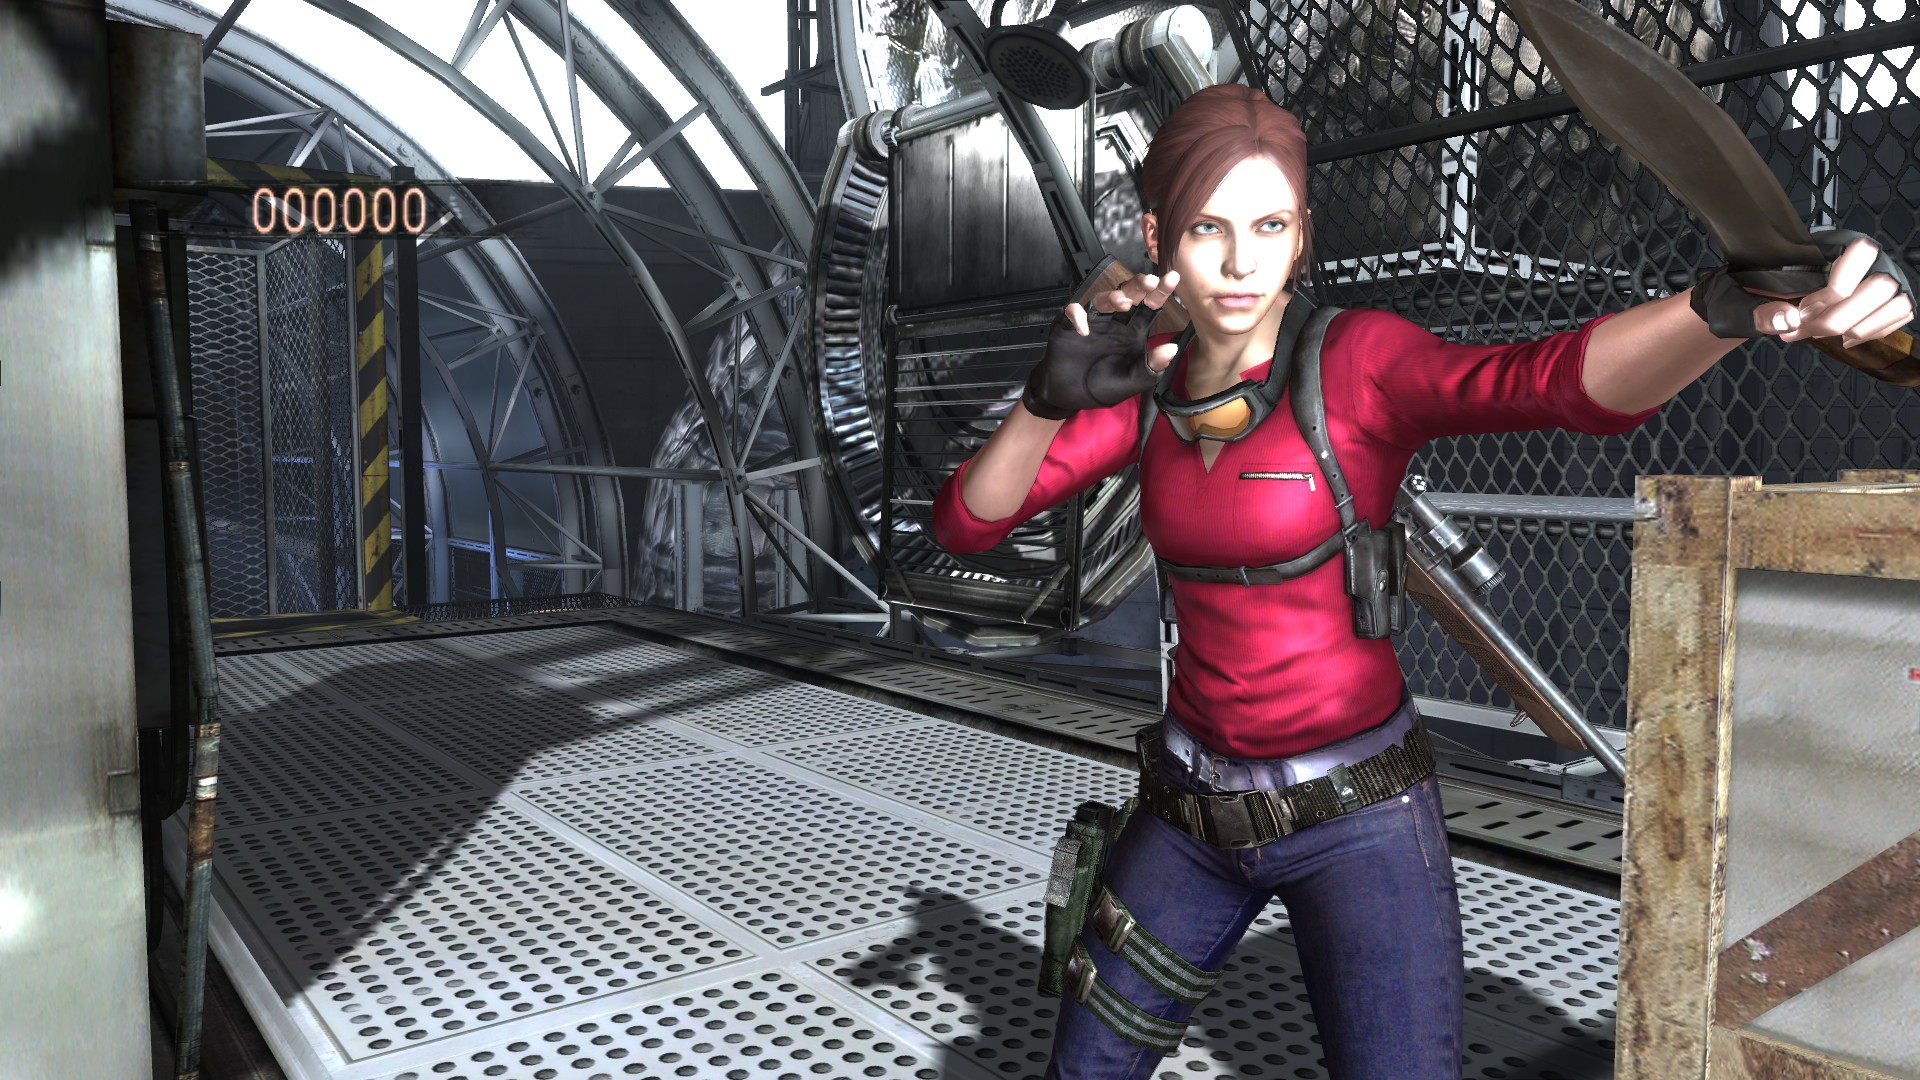 Resident Evil 3 Remake Wallpaper - Jill Valentine by NightFurious on  DeviantArt